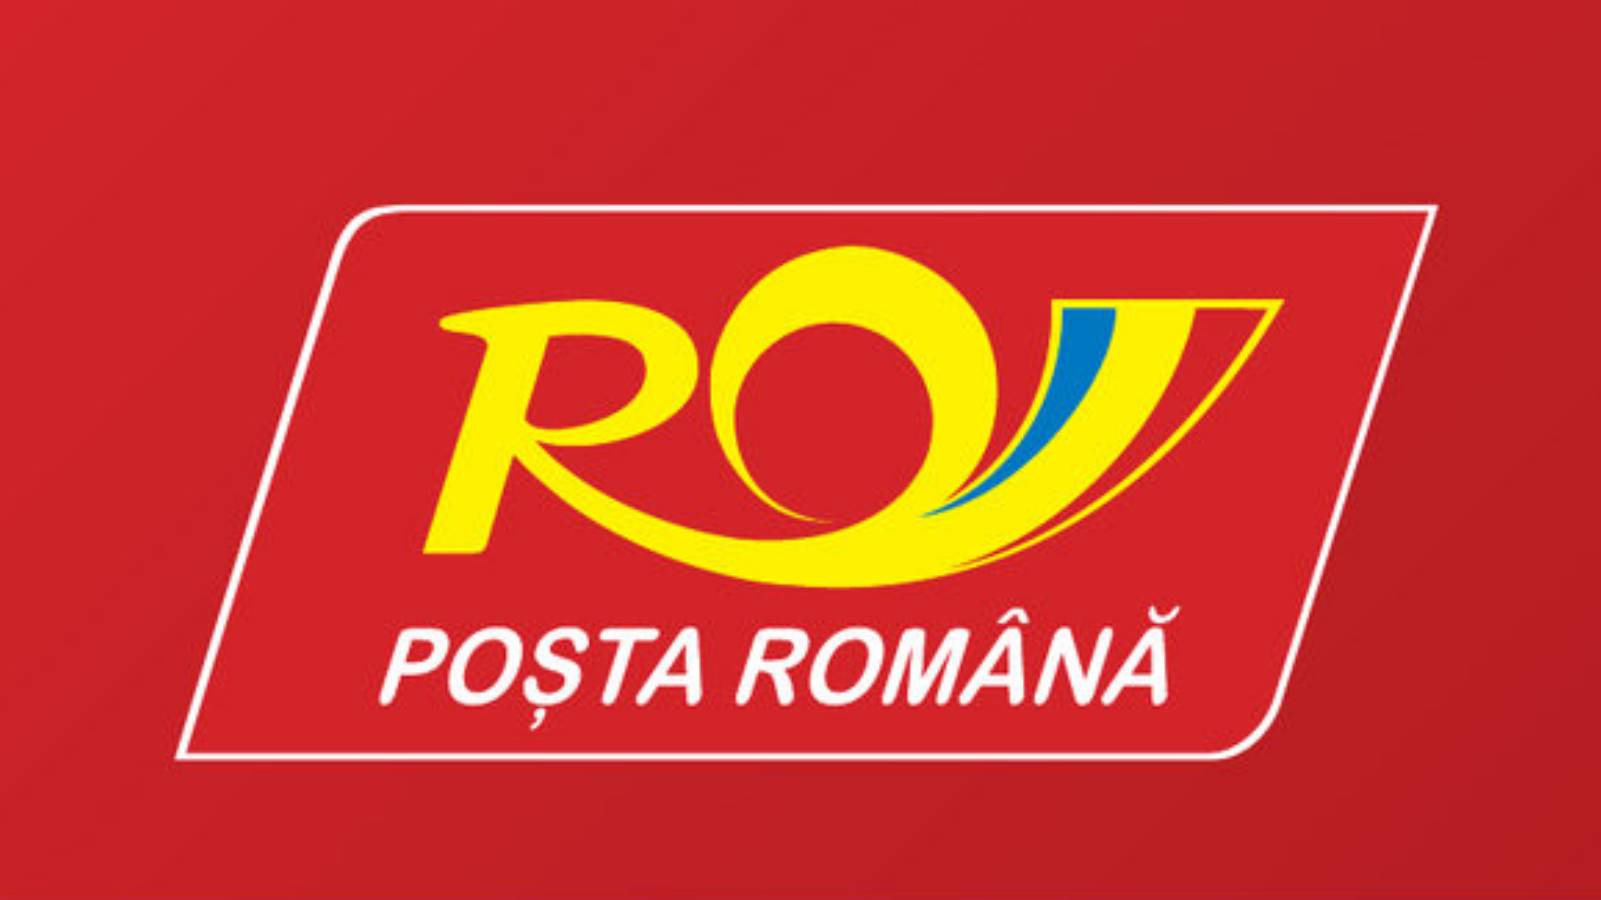 Poczta rumuńska, dostawa tego samego dnia